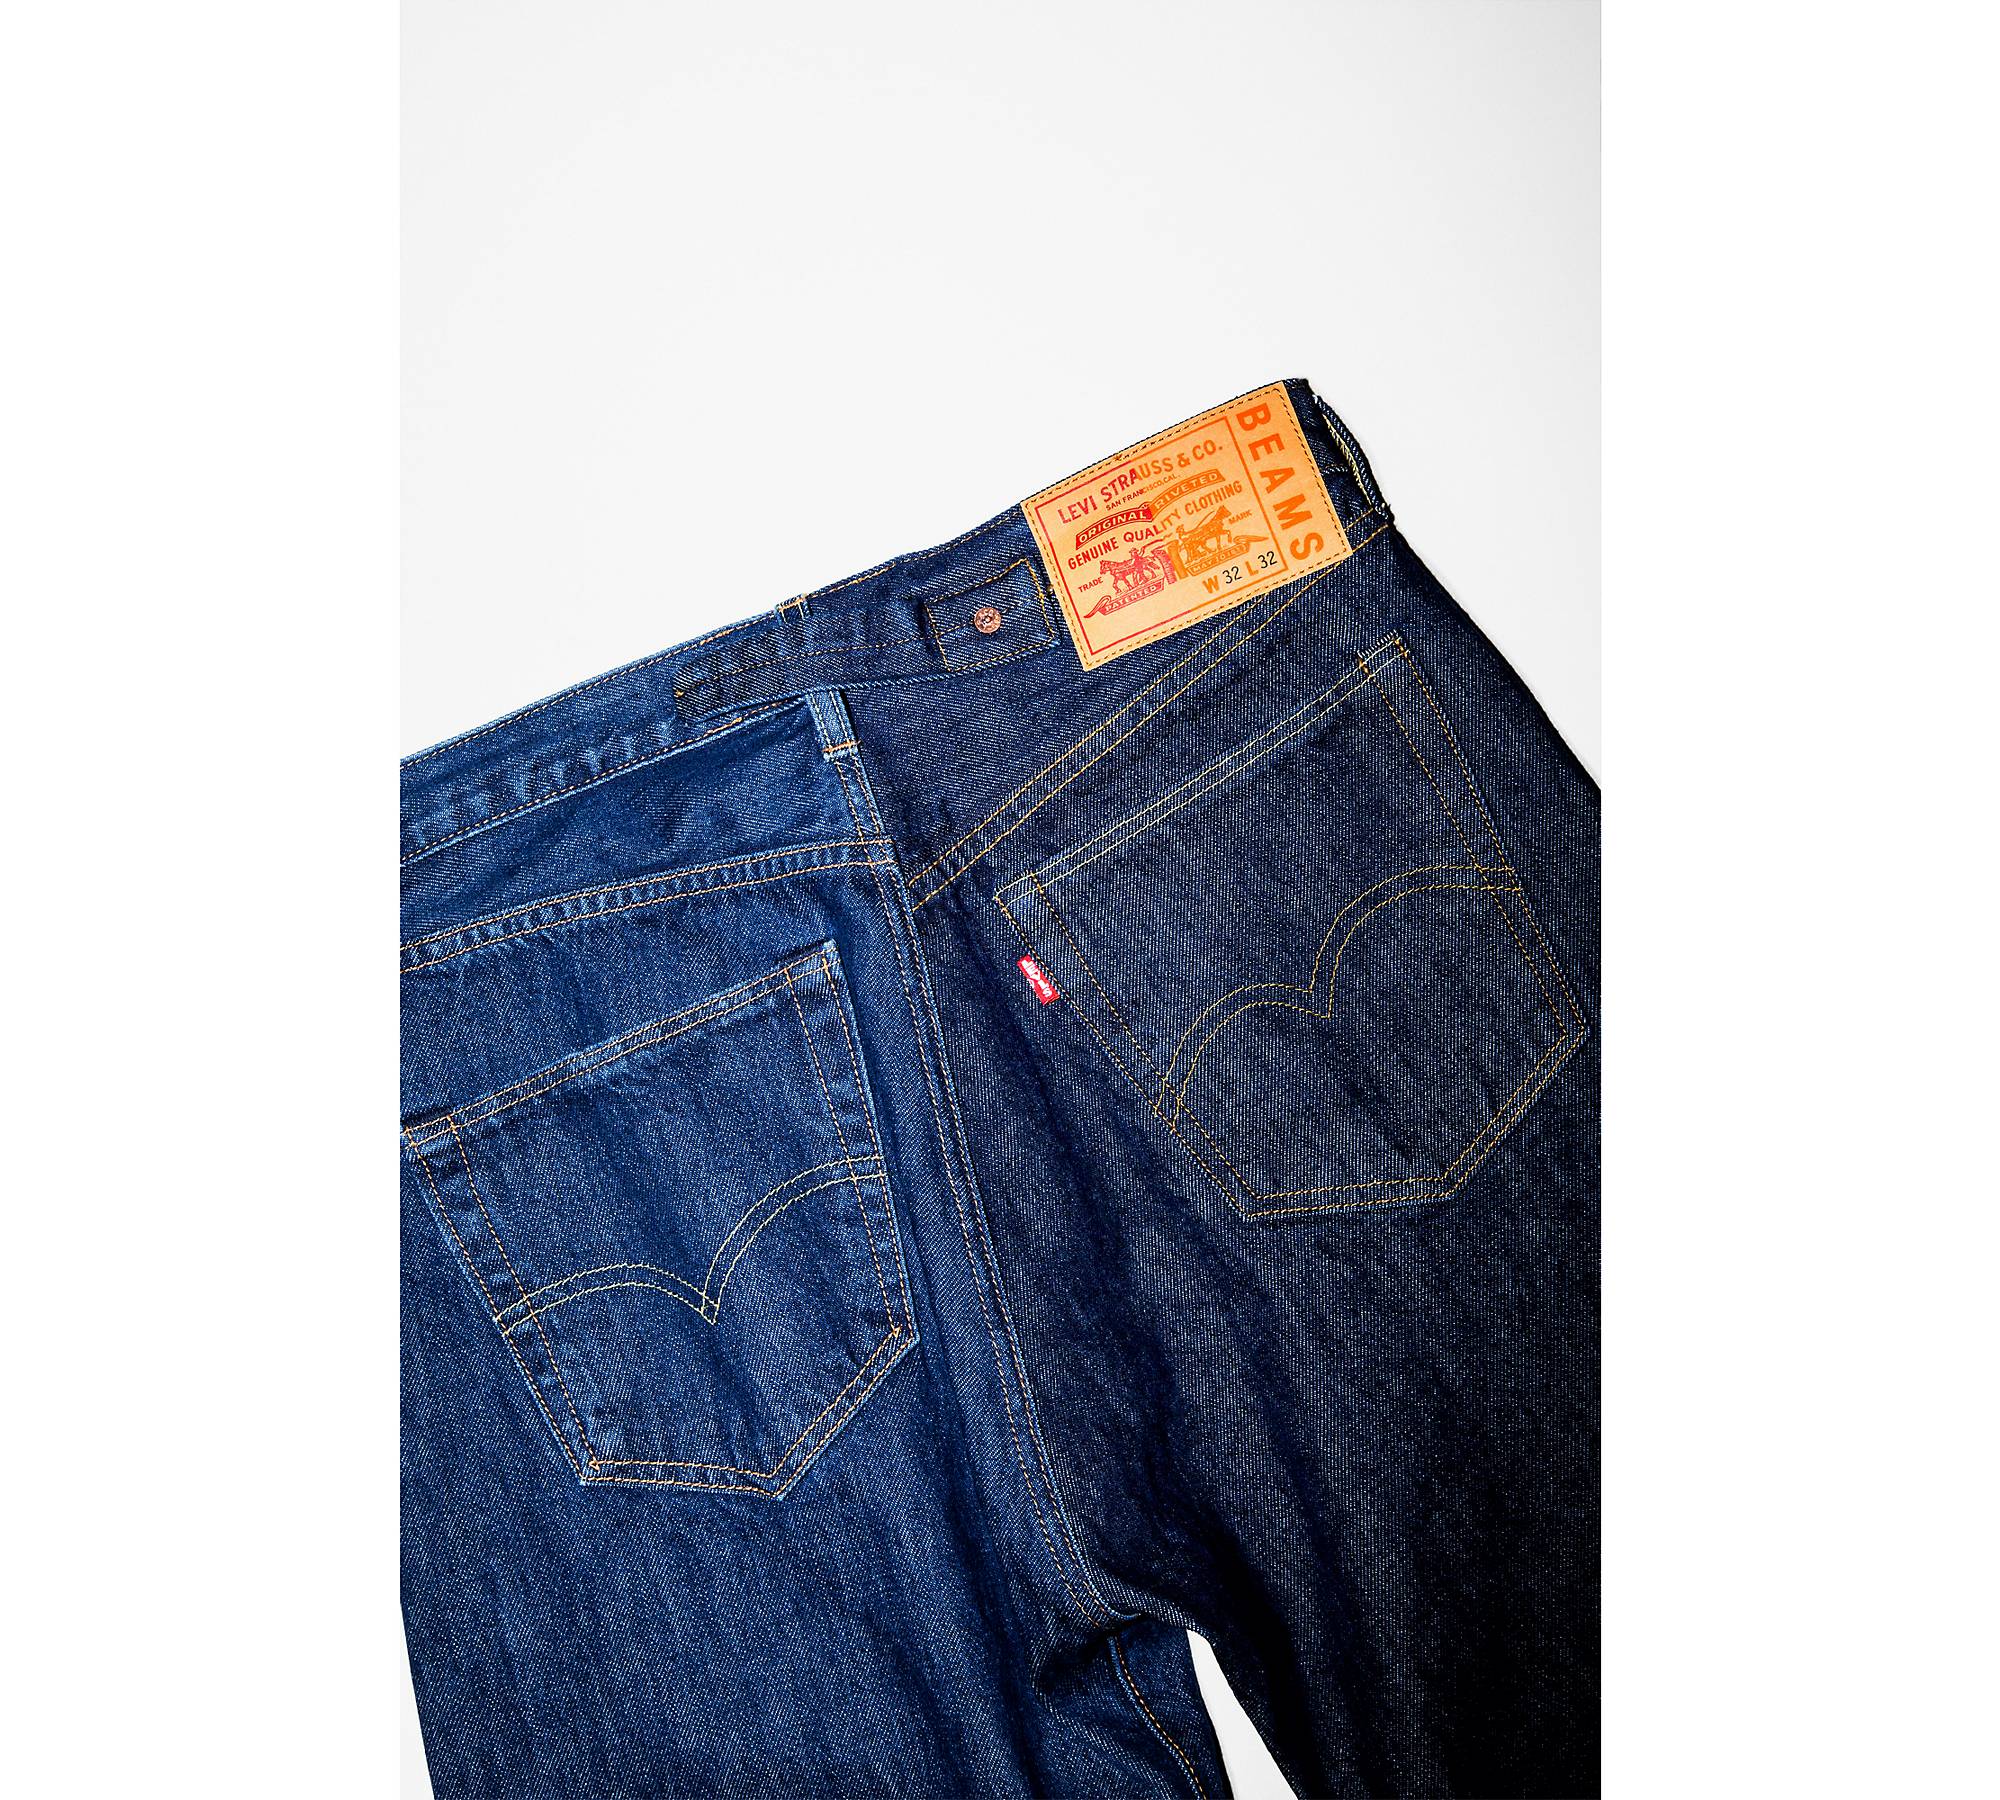 Levi's® X Beams 501® Original Fit Men's Jeans - Dark Wash